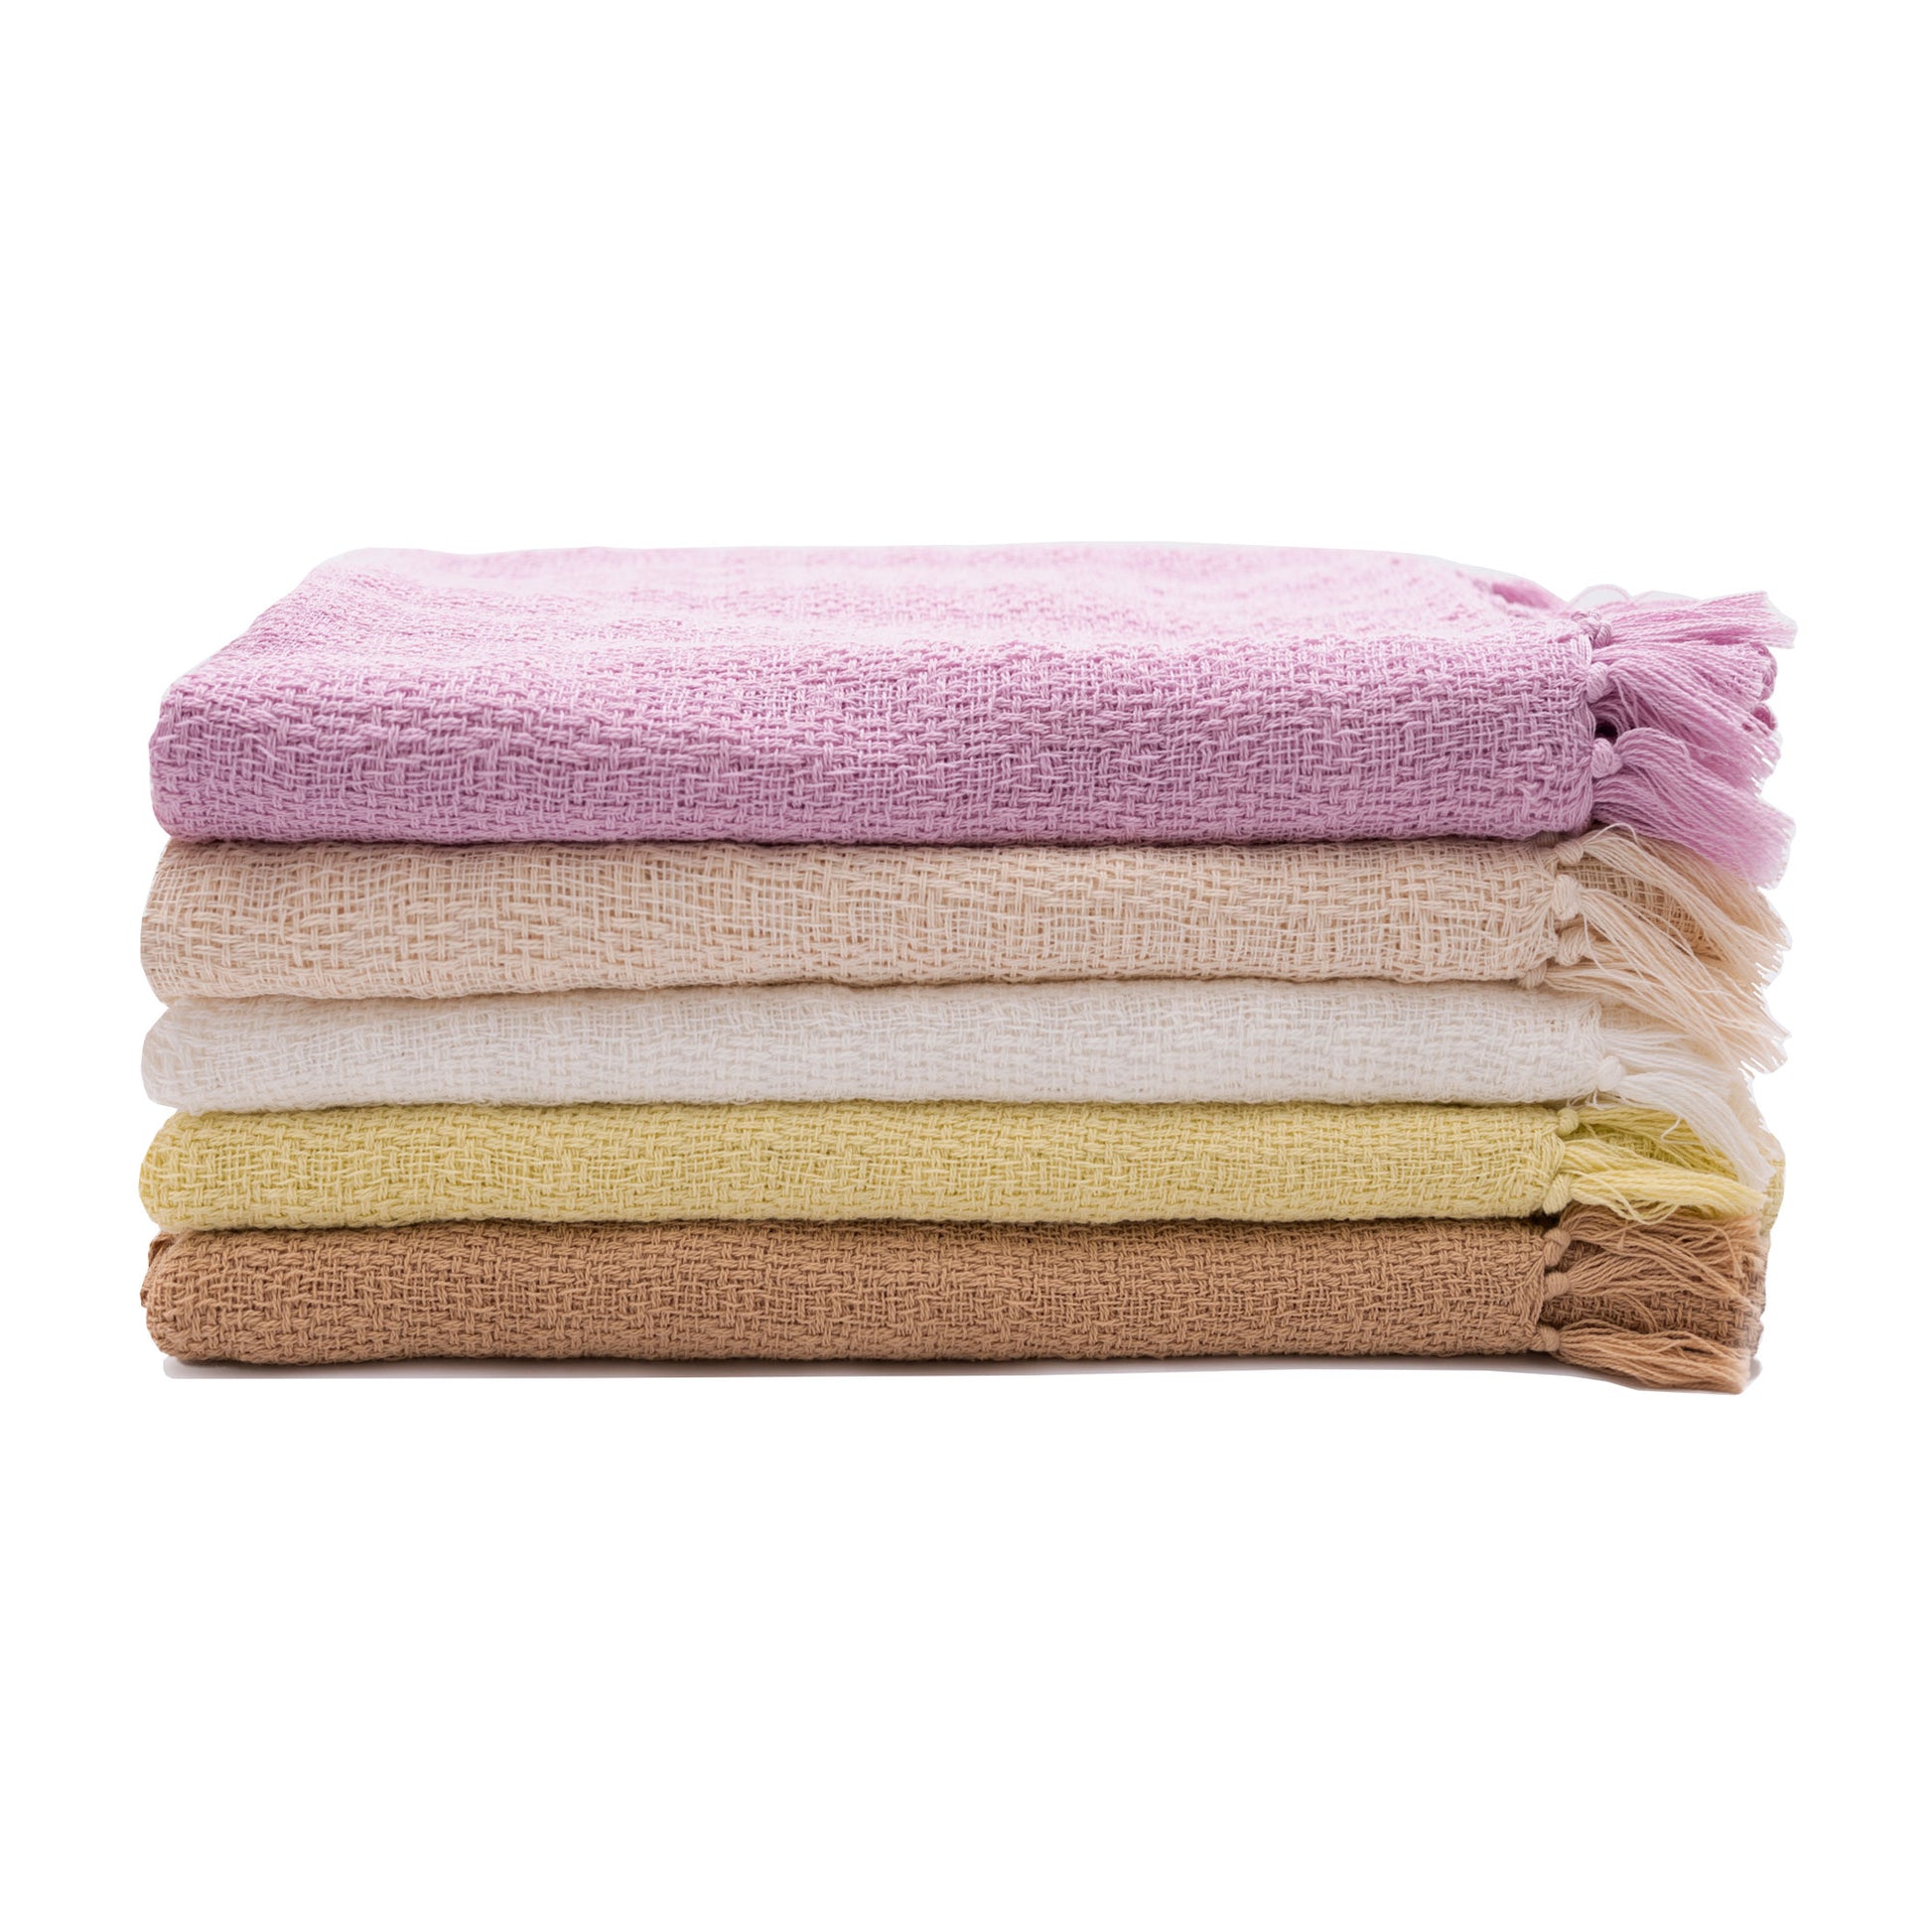 5 colors of "fine" towels